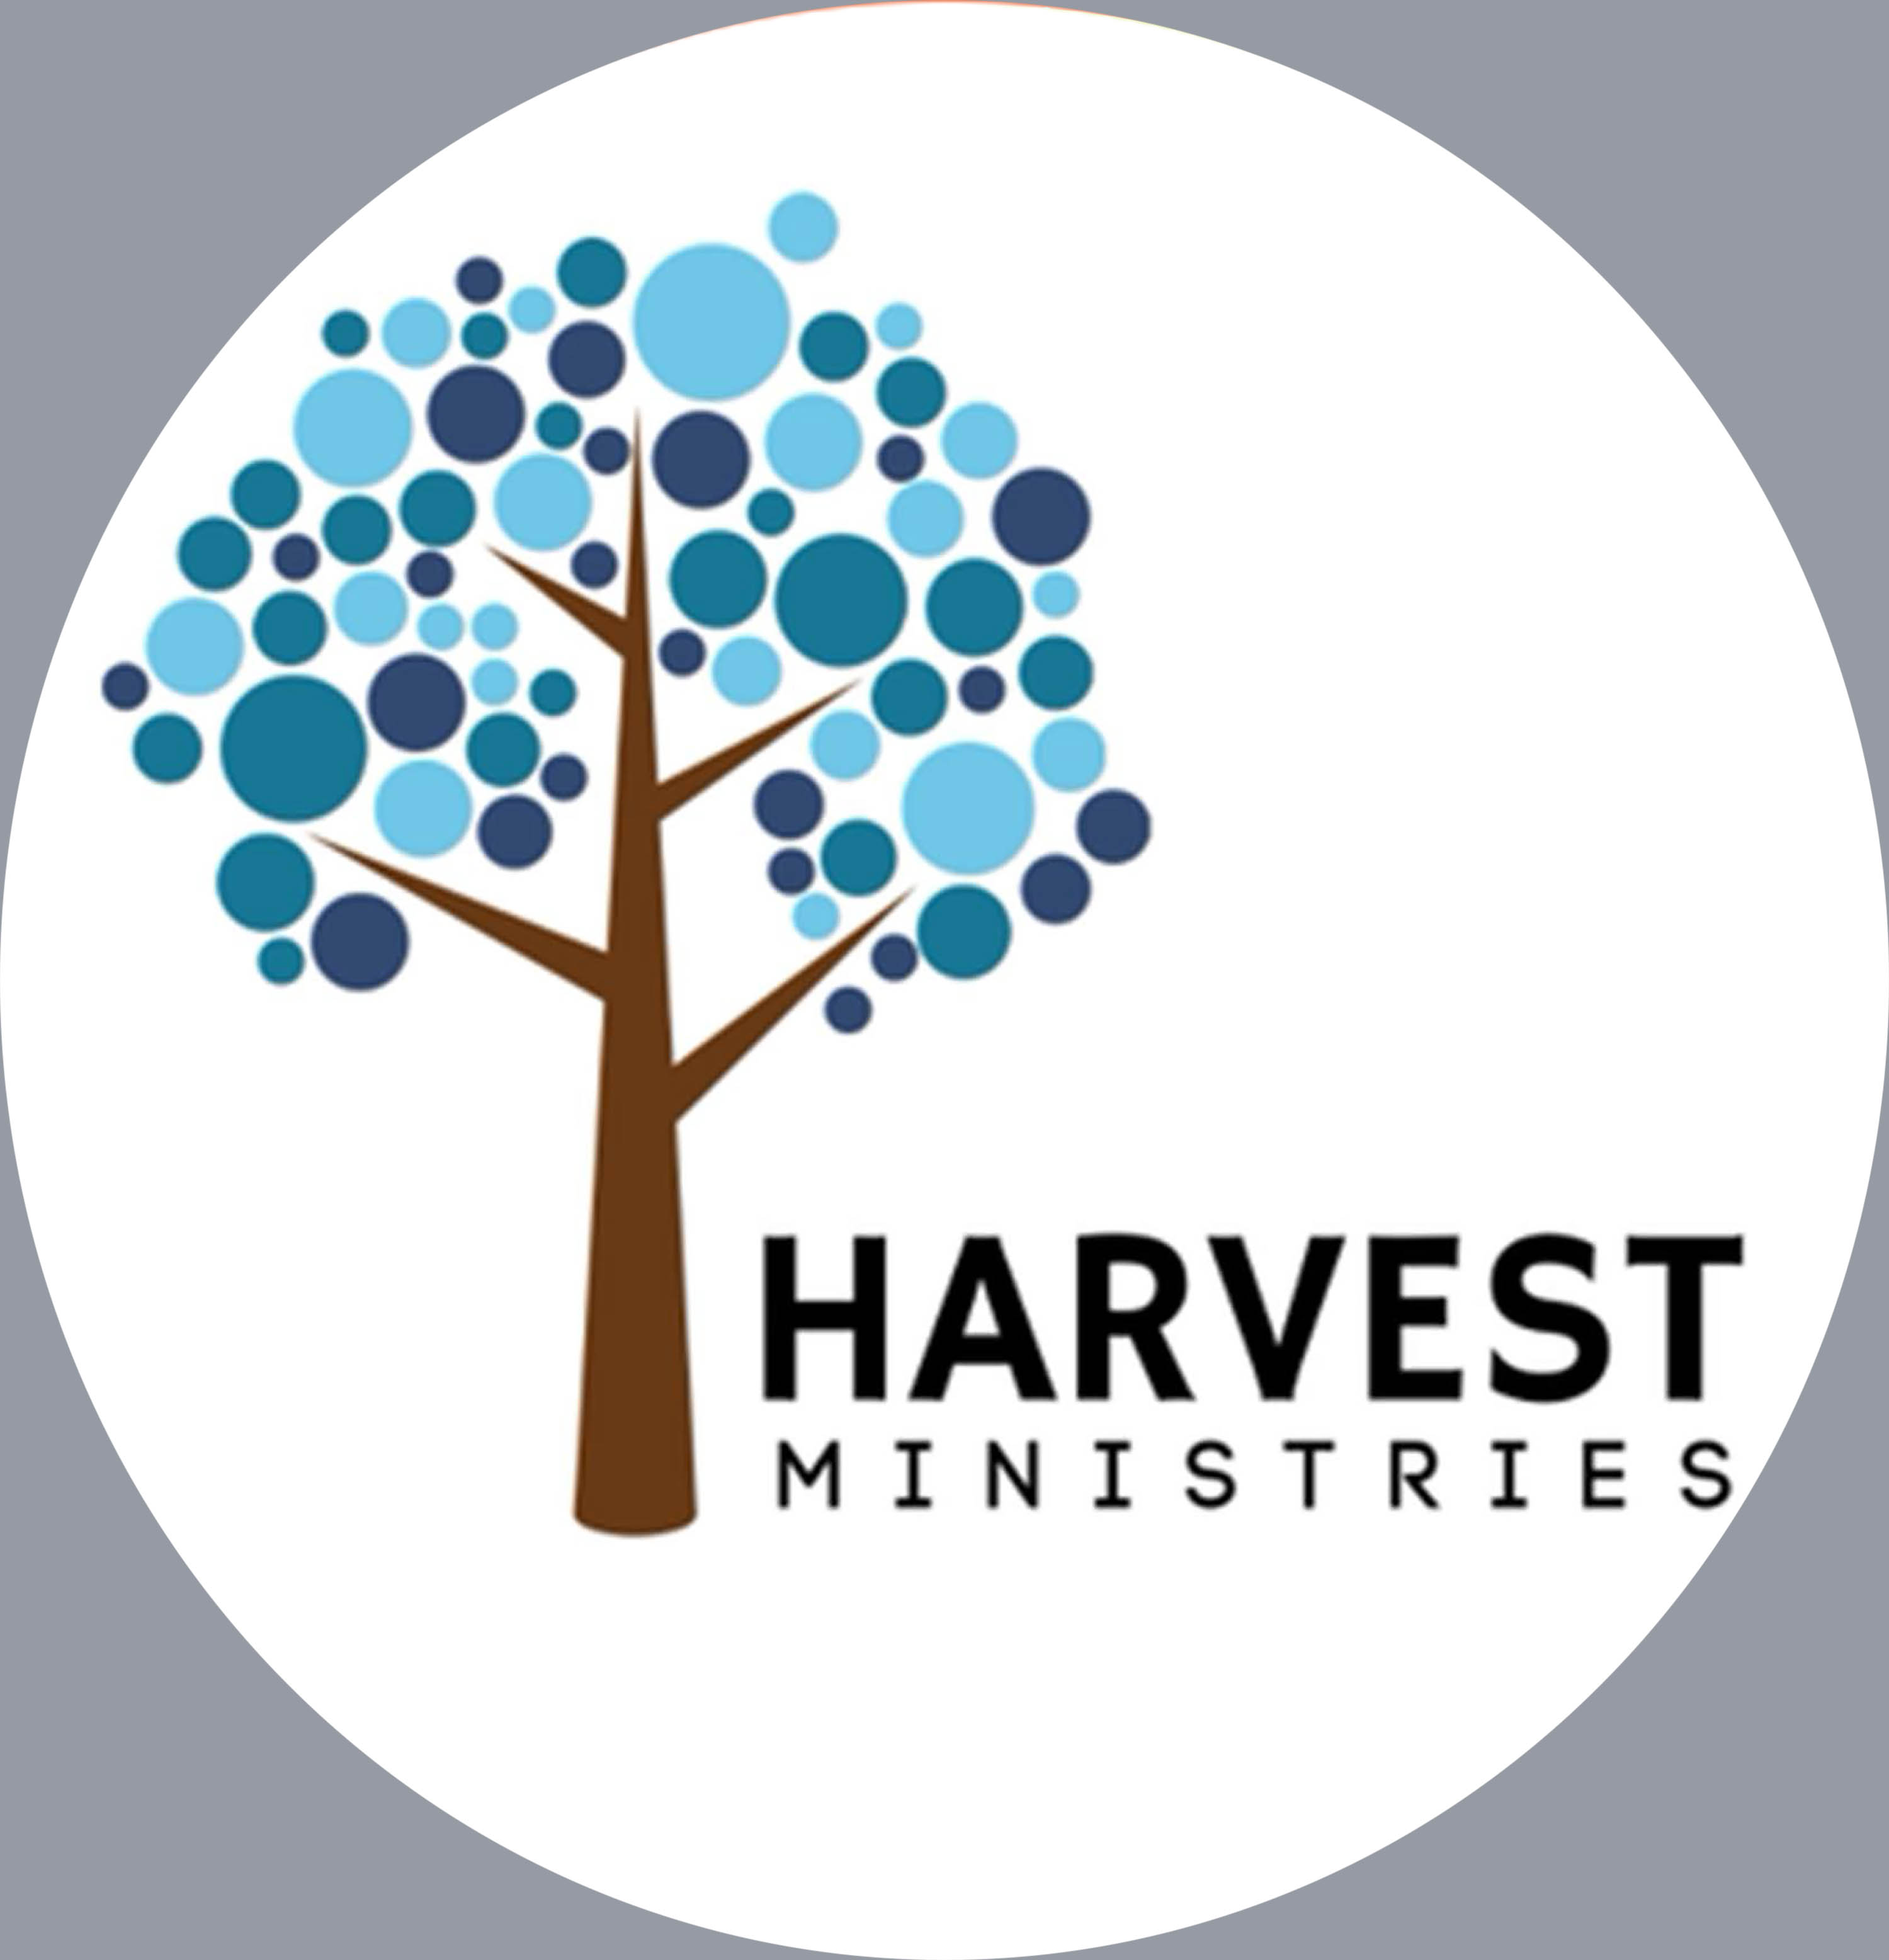 Harvest ministries logo